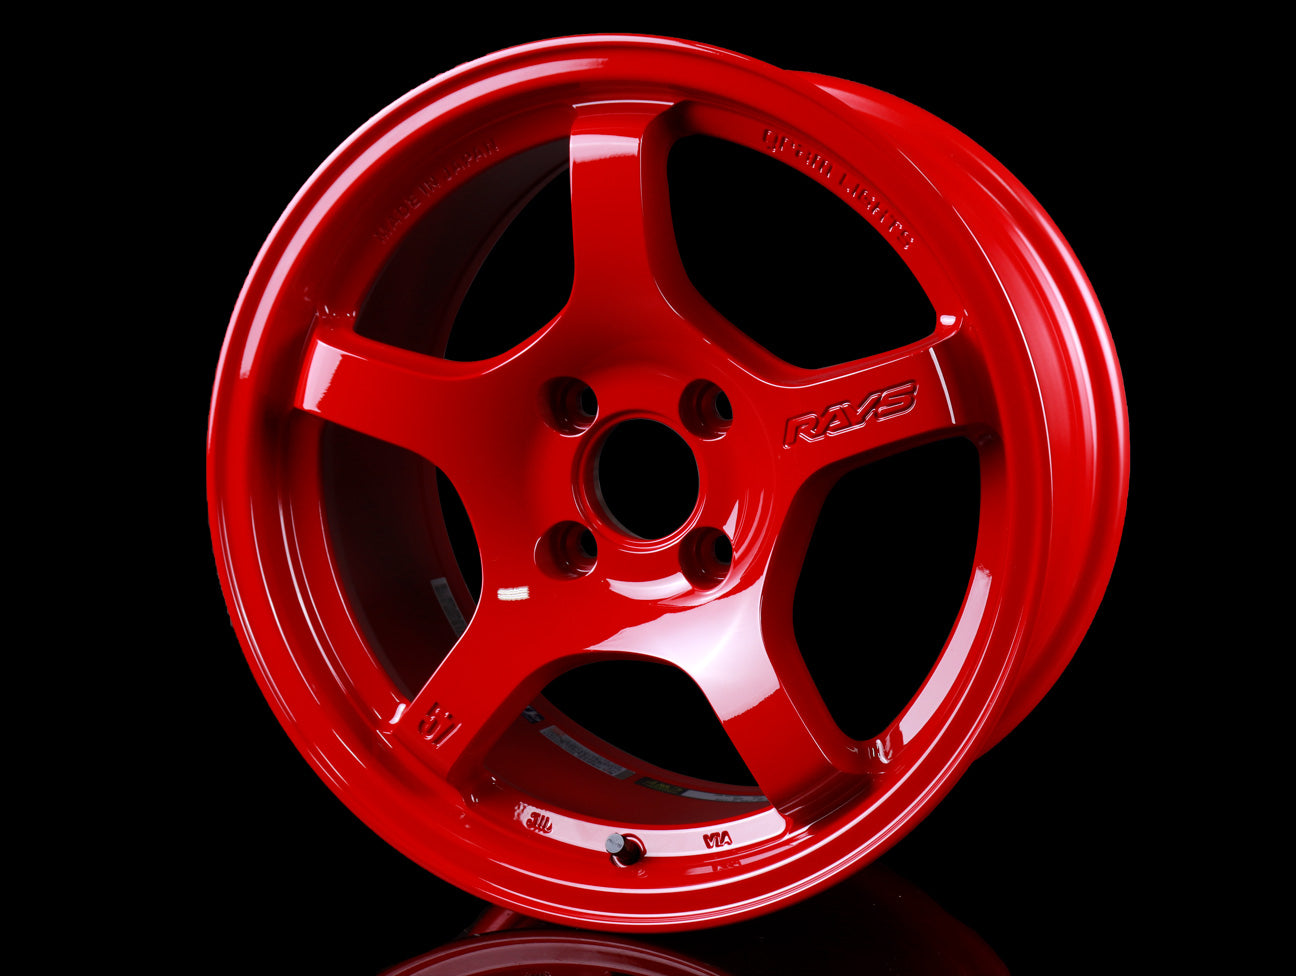 Rays Gram Lights 57CR Wheels - Milano Red 15x8.0 / 4x100